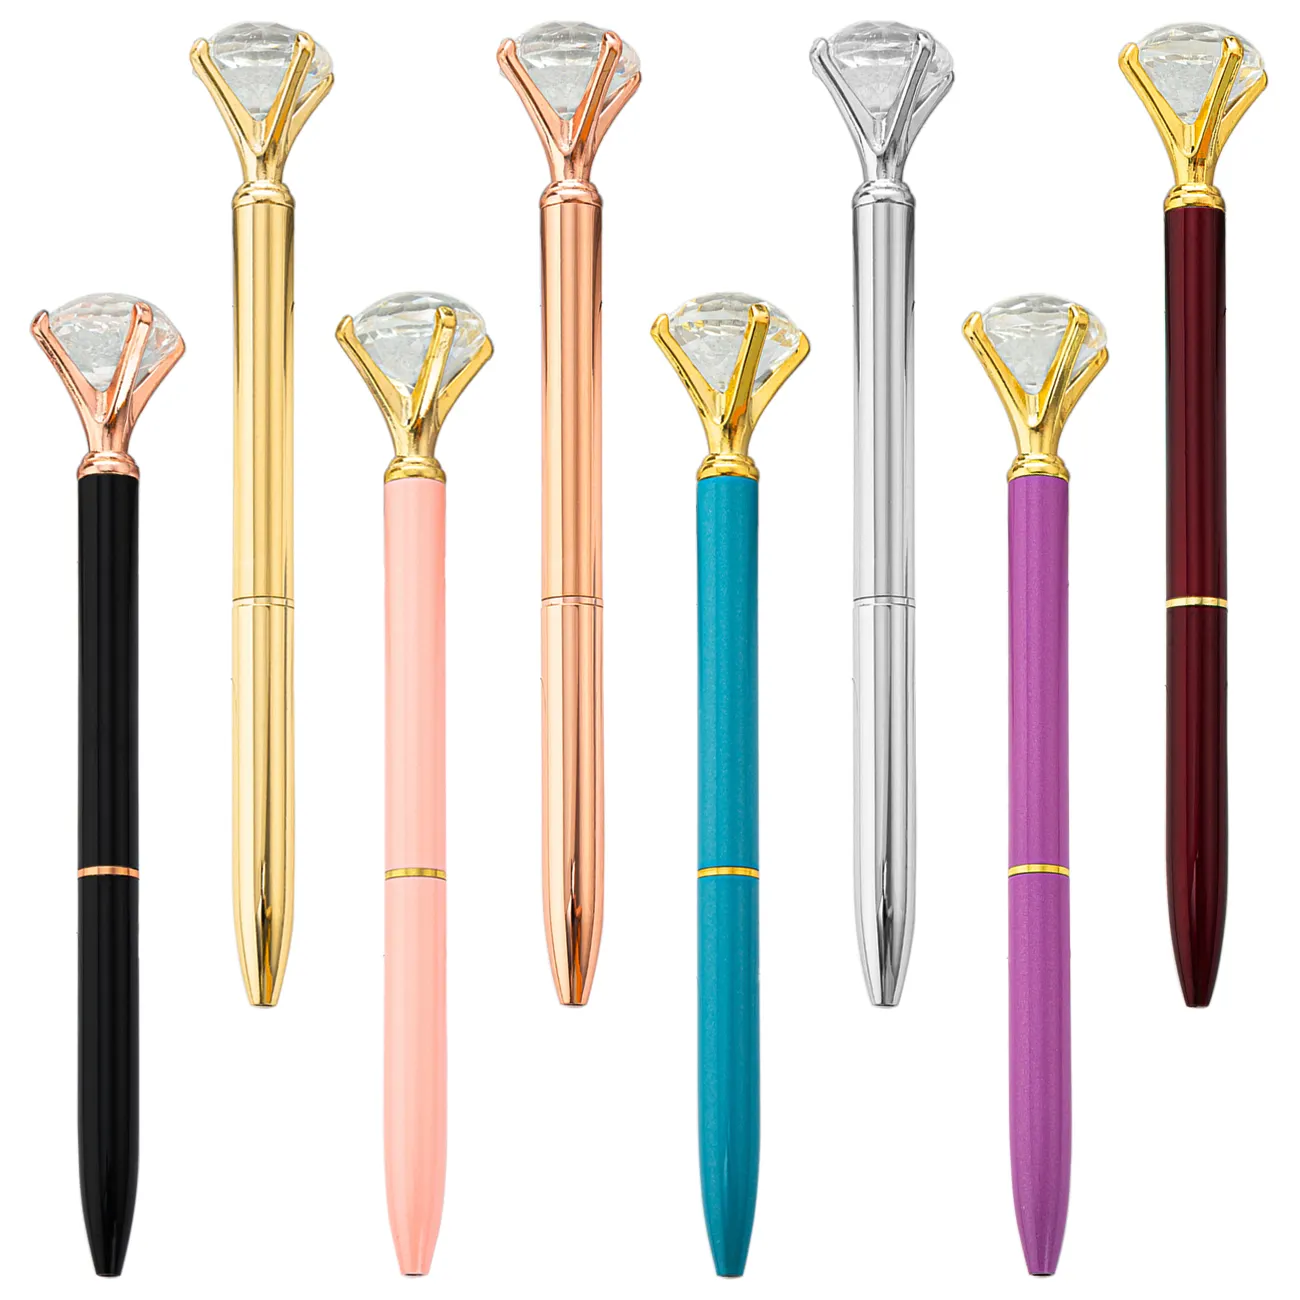 Pen New New Arrival Large Crystal Diamond Head Ballpoint Pen On The Top Big Diamond Metal Metal Ballpoint Pen For Gifts